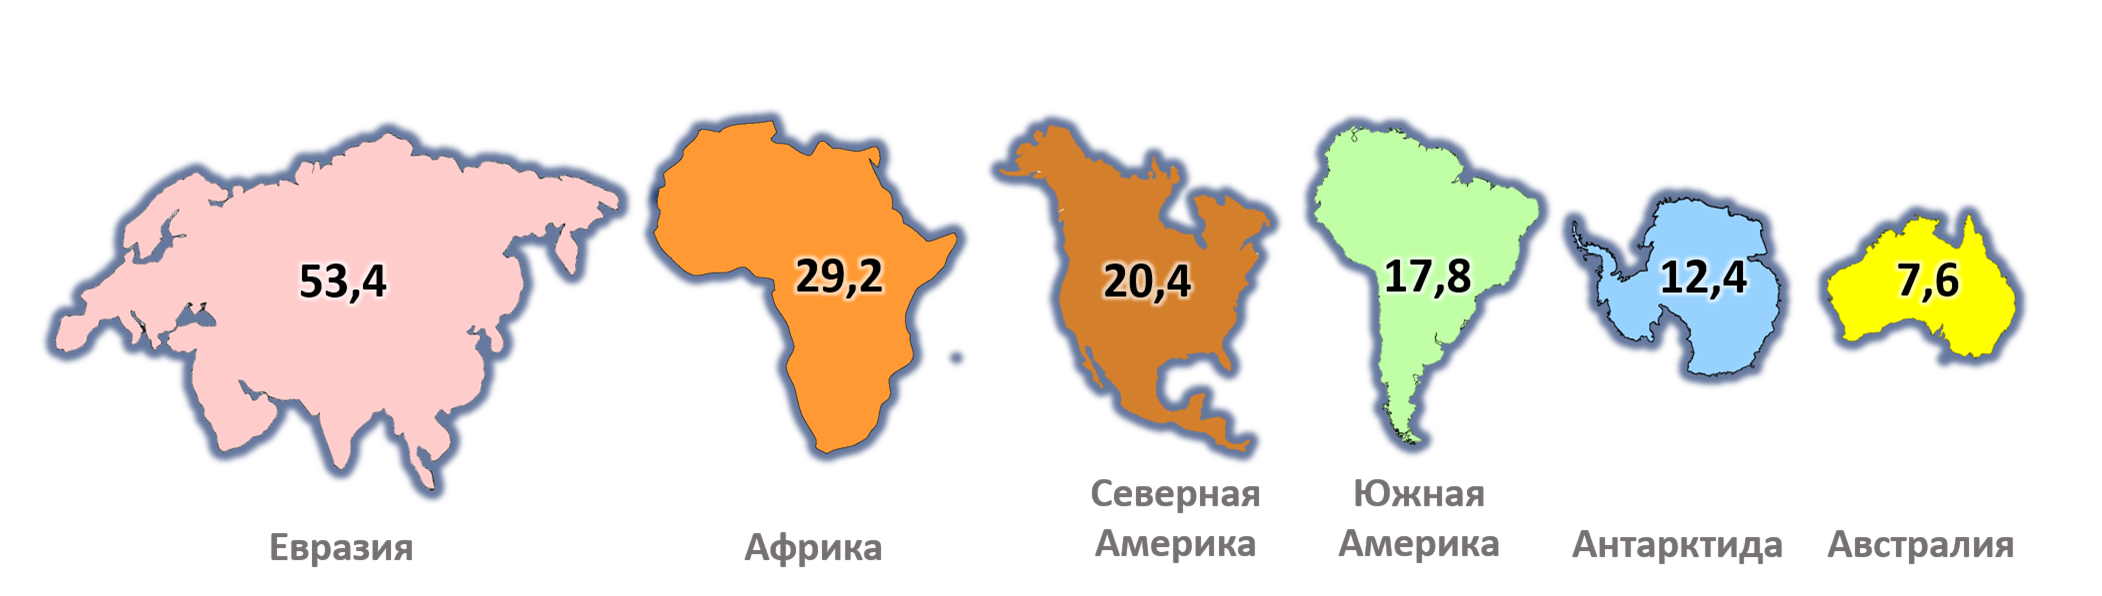 Евразия Африка Северная Америка Южная Америка Австралия Антарктида. Сравнение размеров материков на карте. Размеры материков по площади.